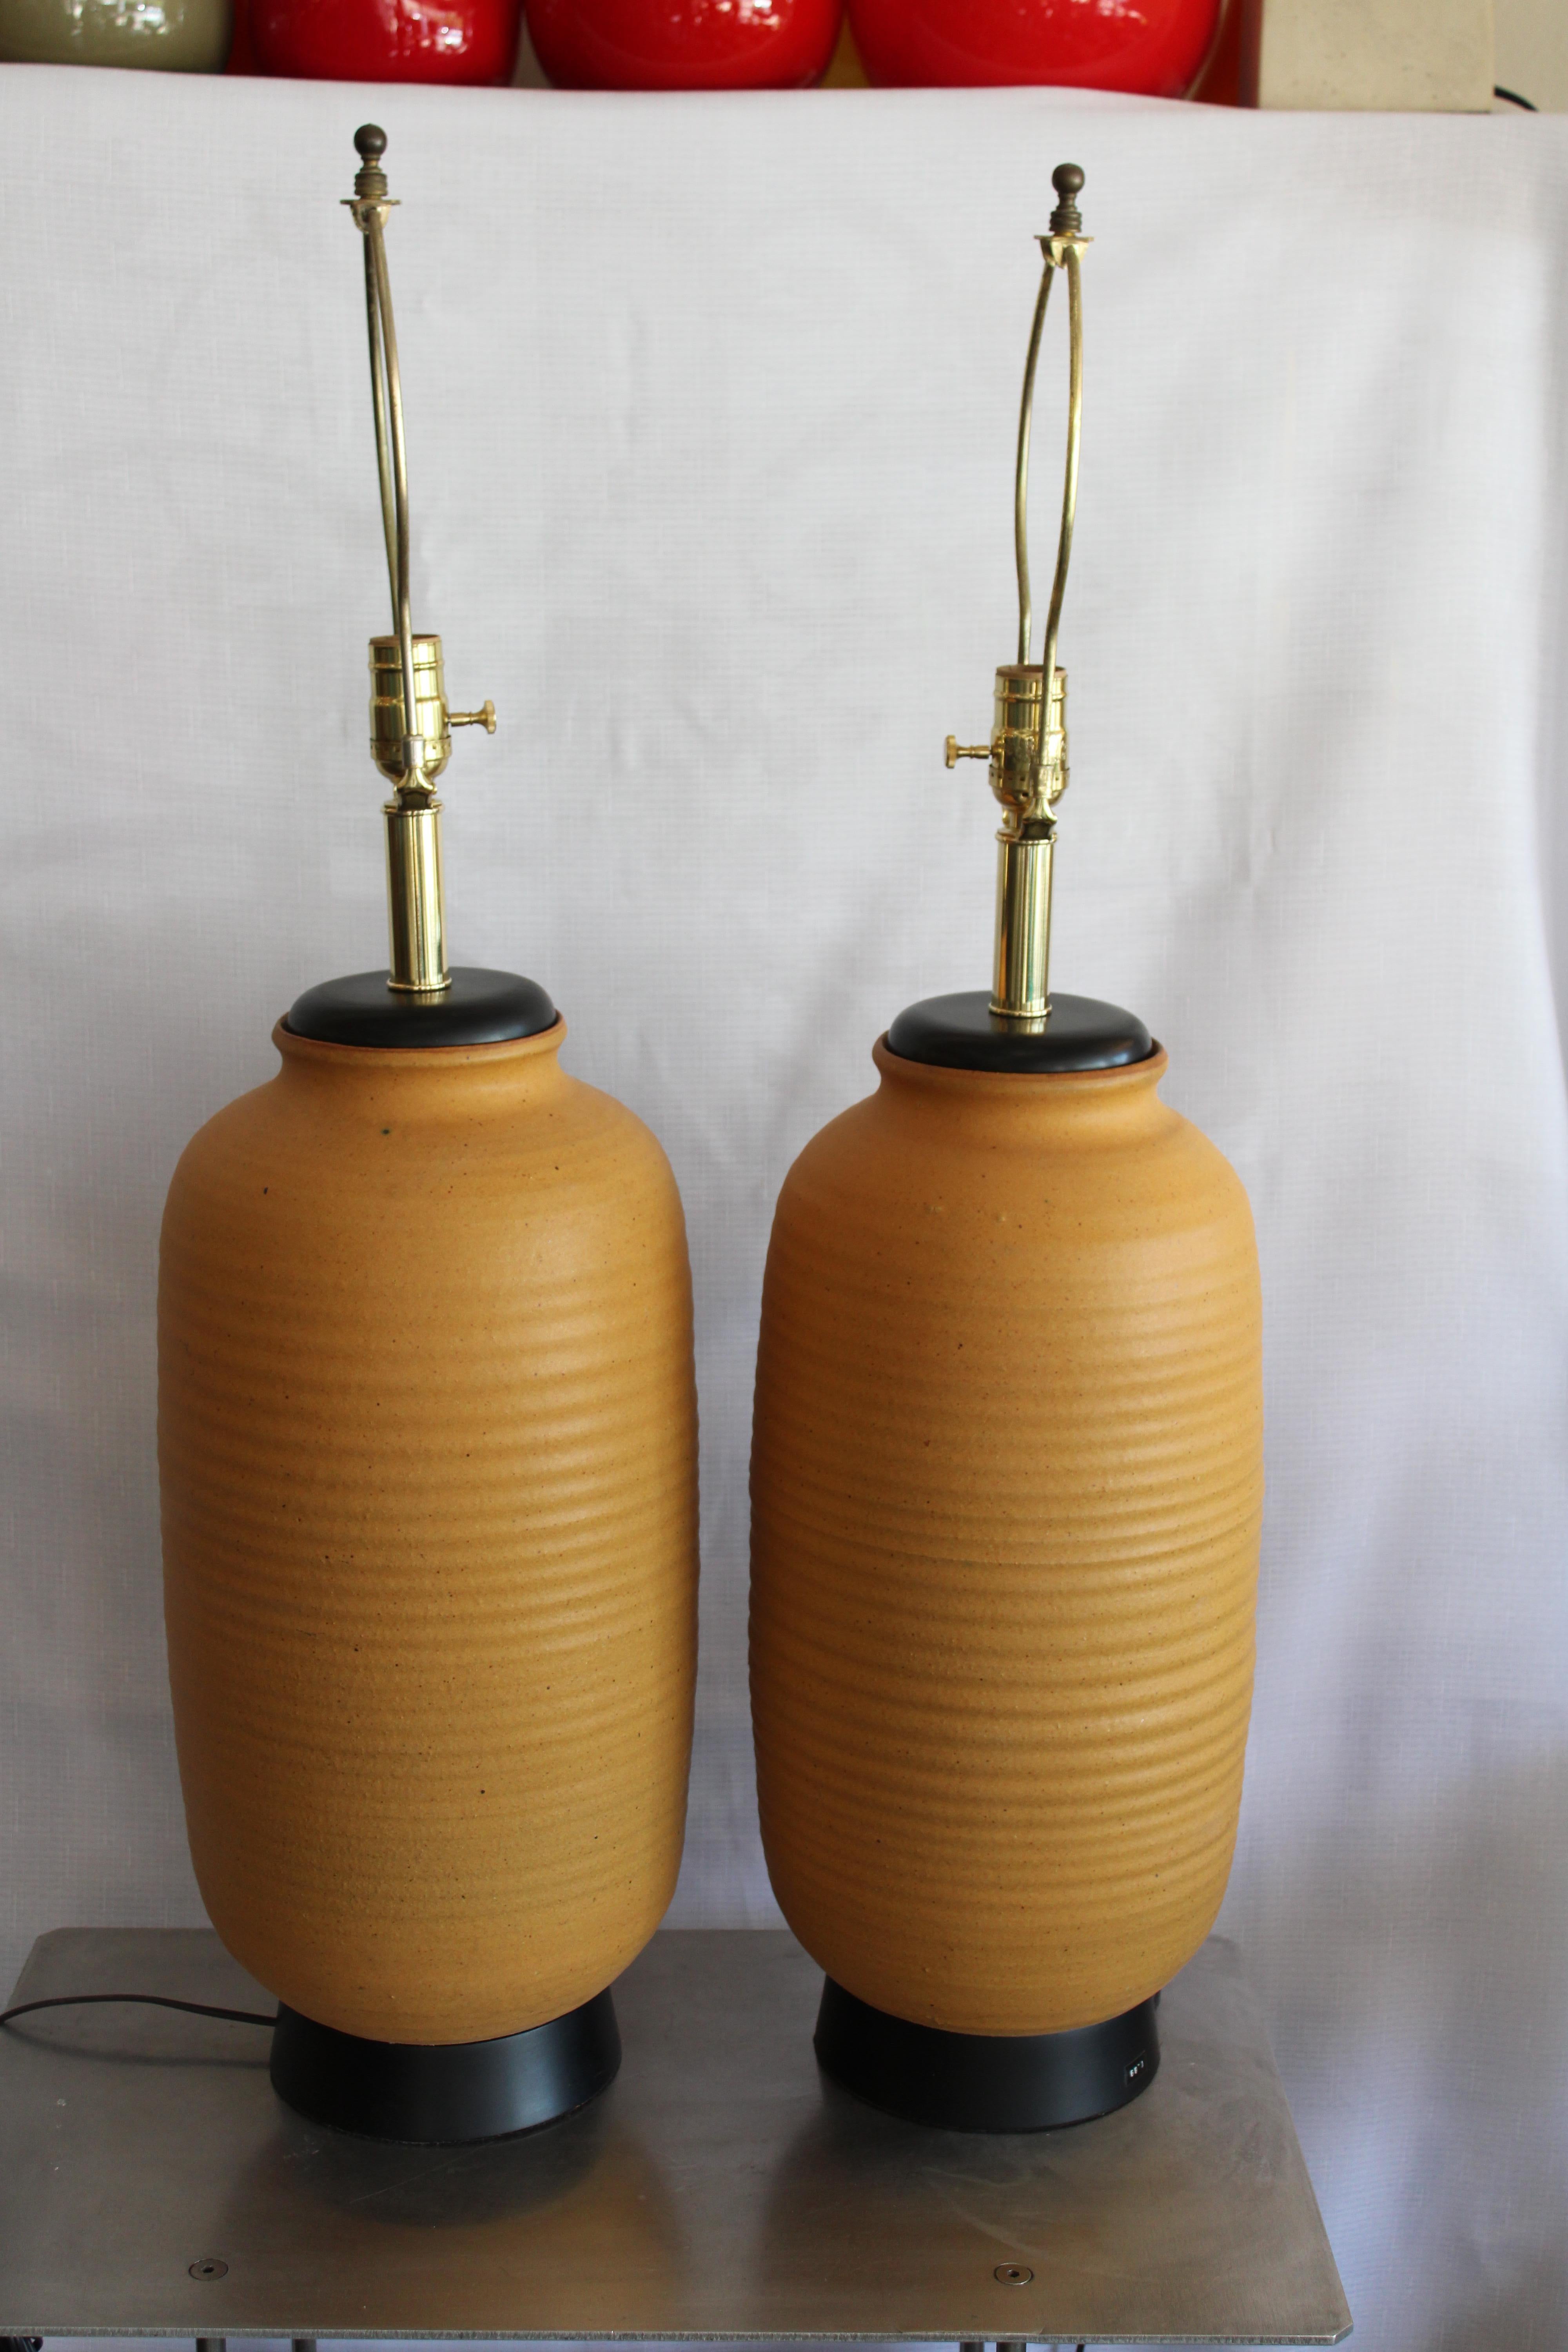 Pair of ceramic lamps by Bob Kinzie. Lamps measure 9.5